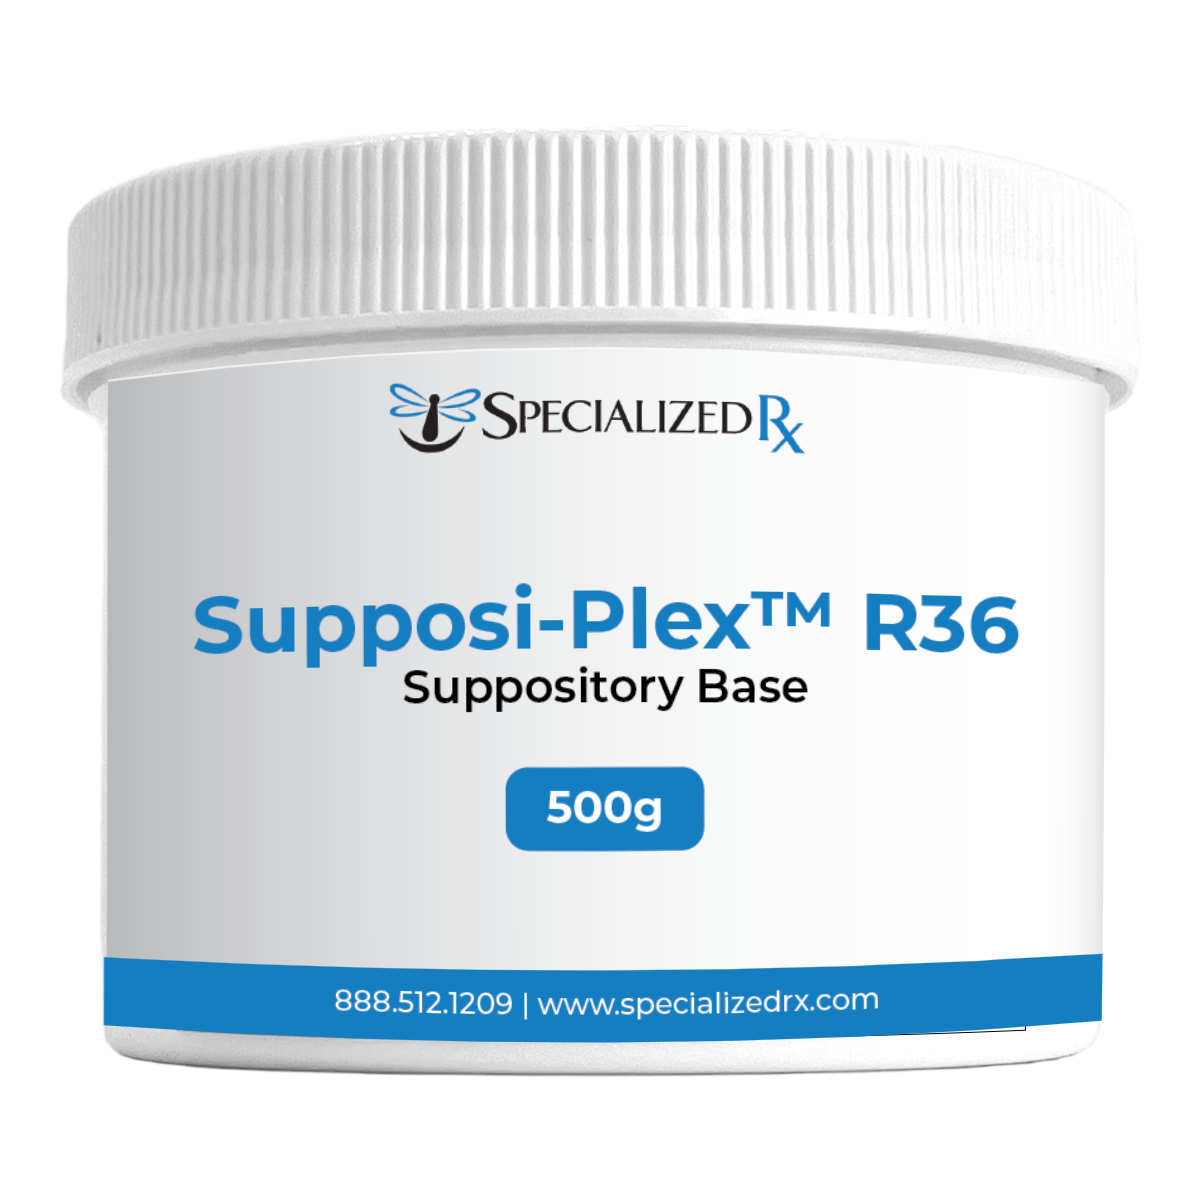 Supposi-Plex™ R36 Suppository Base